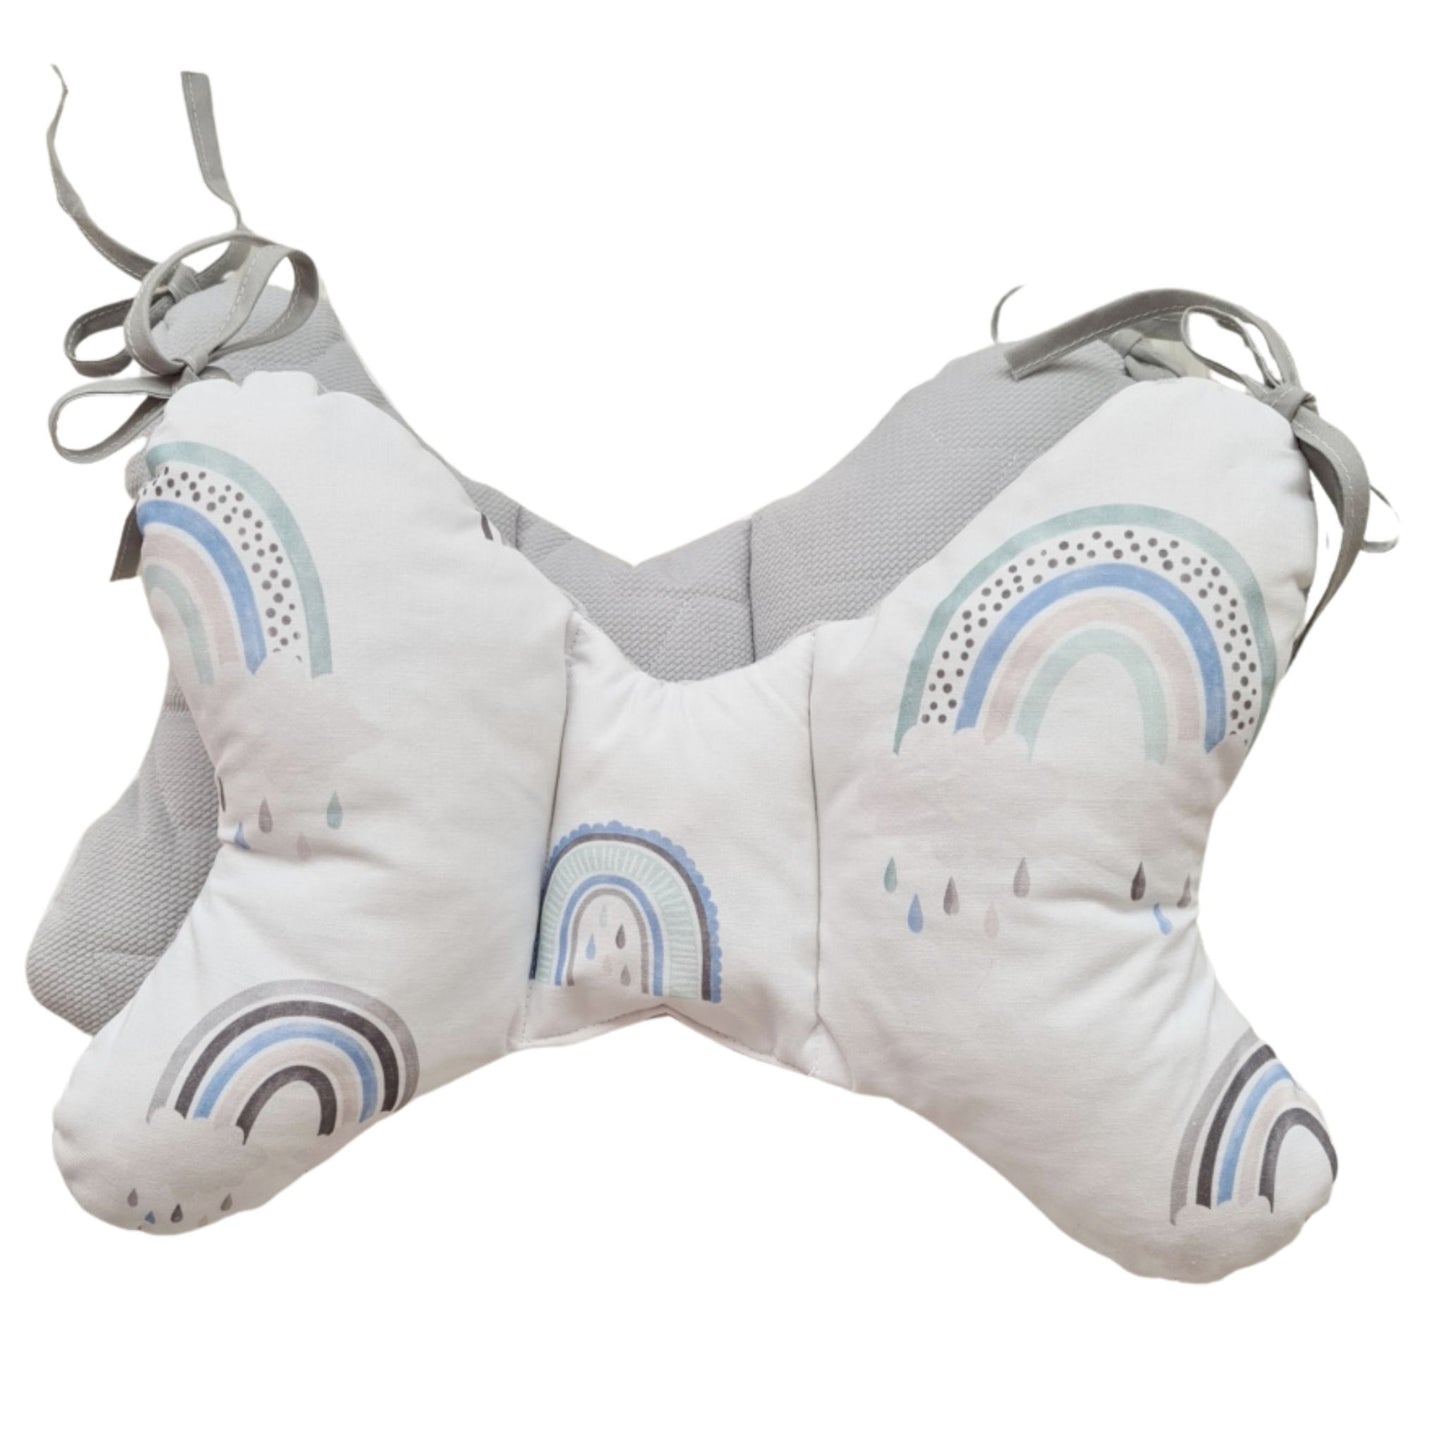 pillow for baby stroller pillow support elephant ears pillow